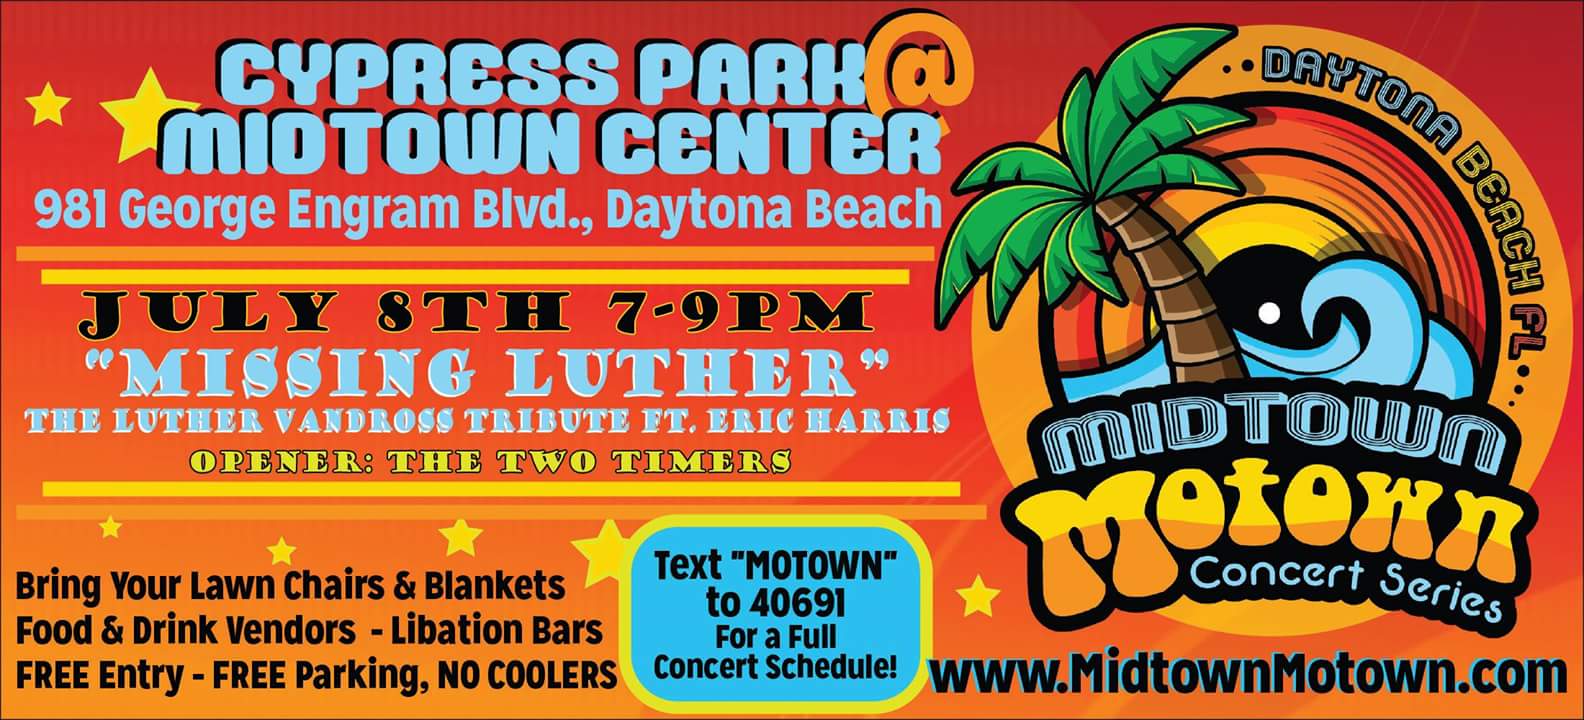 Midtown Motown Concert Daytona Beach 2017